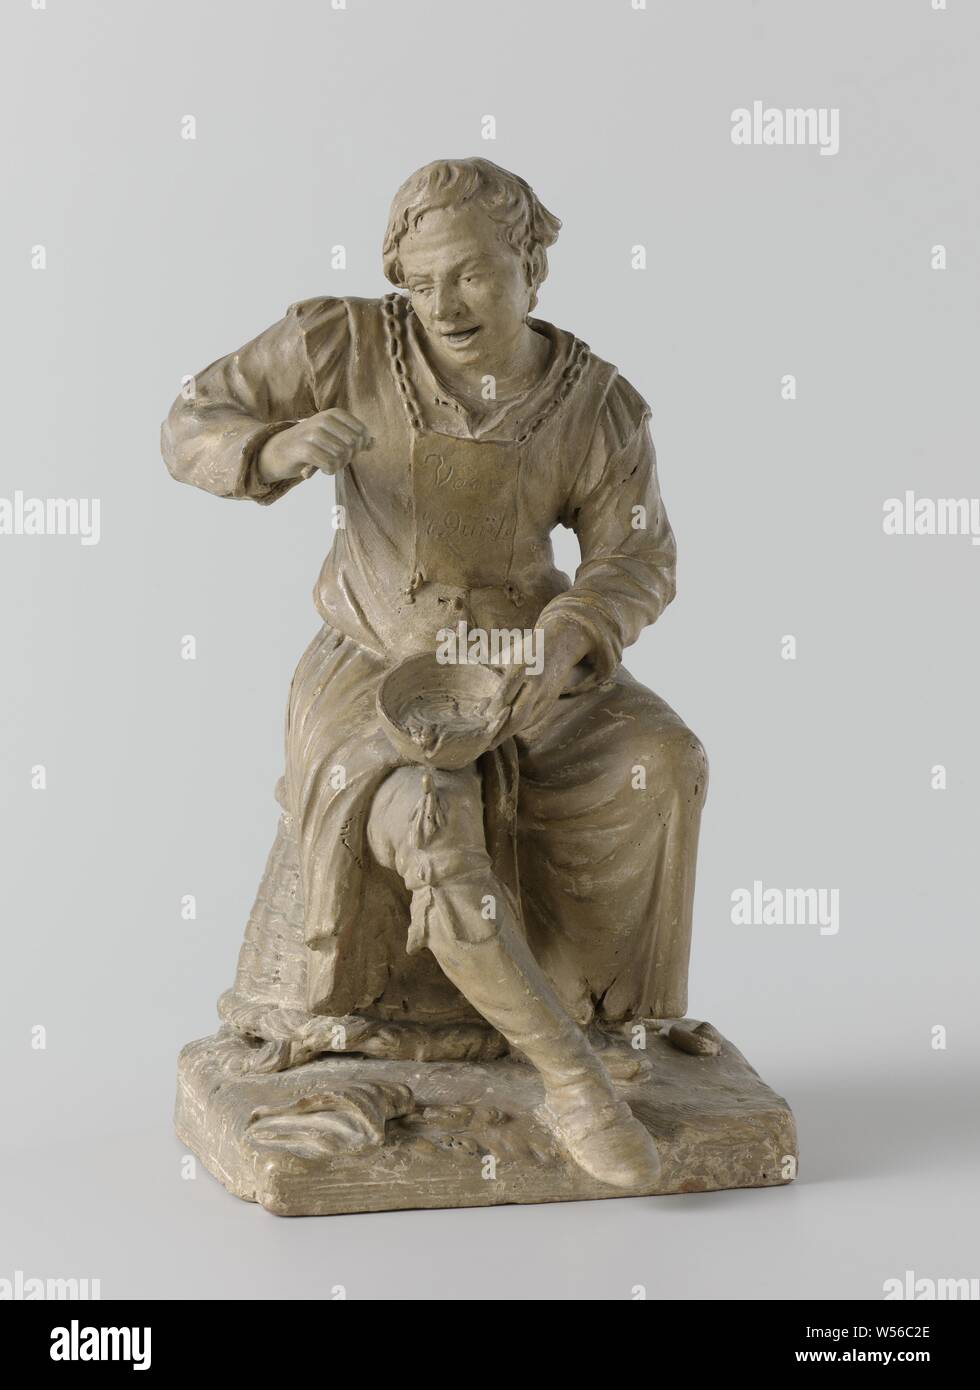 Pap mangiare giovane uomo, Jan Schmeltzing (III), Leiden, c. 1680 - c. 1700, terracotta (materiale di argilla), h 29.5 cm × W 18,0 cm × d 17,0 cm Foto Stock